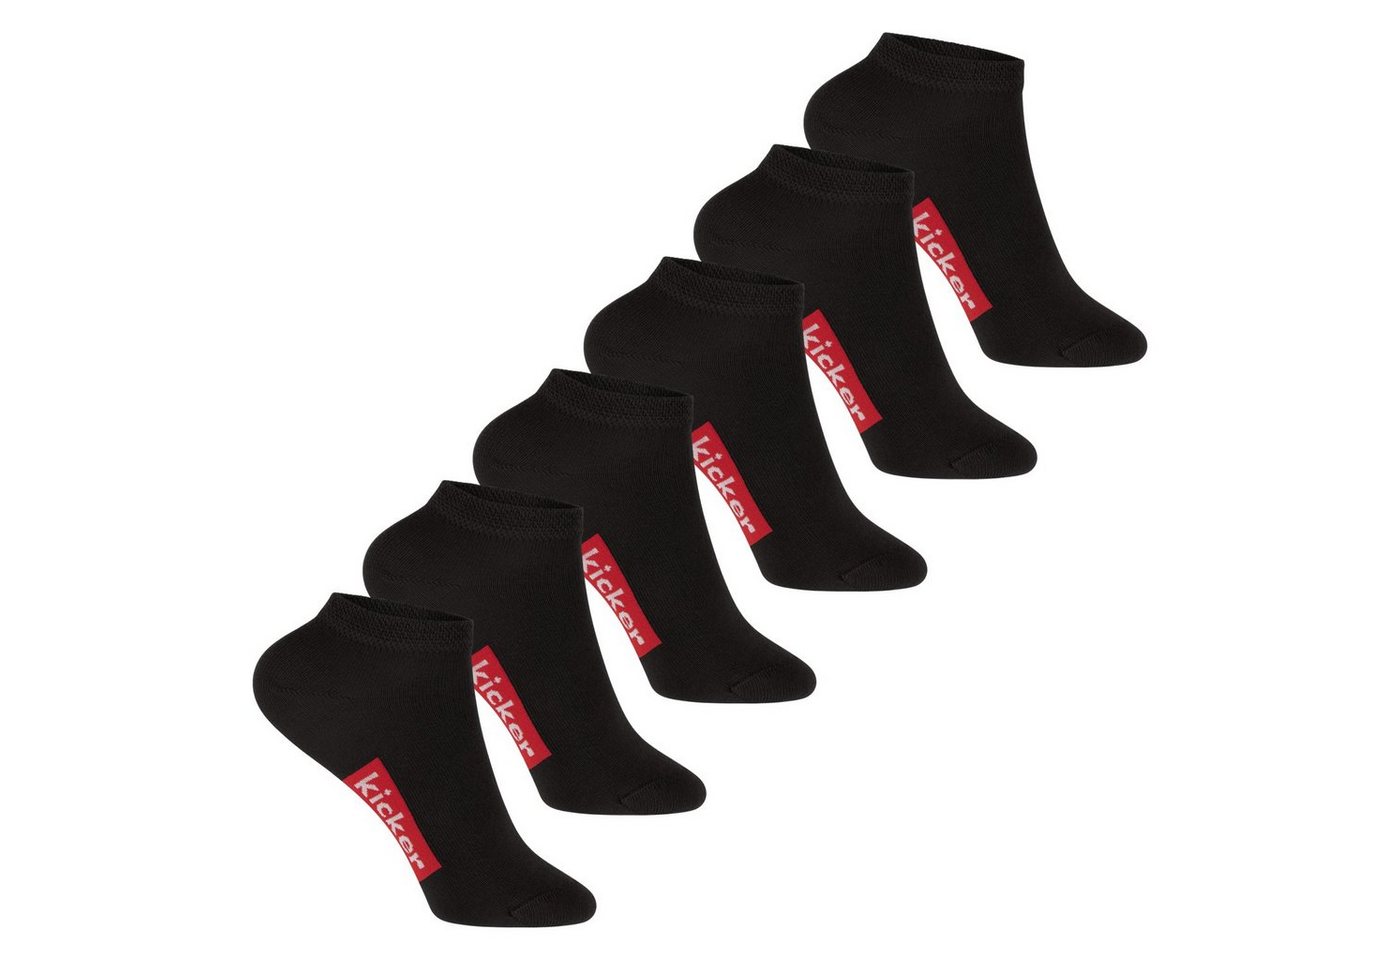 Kicker Kurzsocken kicker Kinder Sneaker Socken (6 Paar) Schwarz 23-26 von Kicker